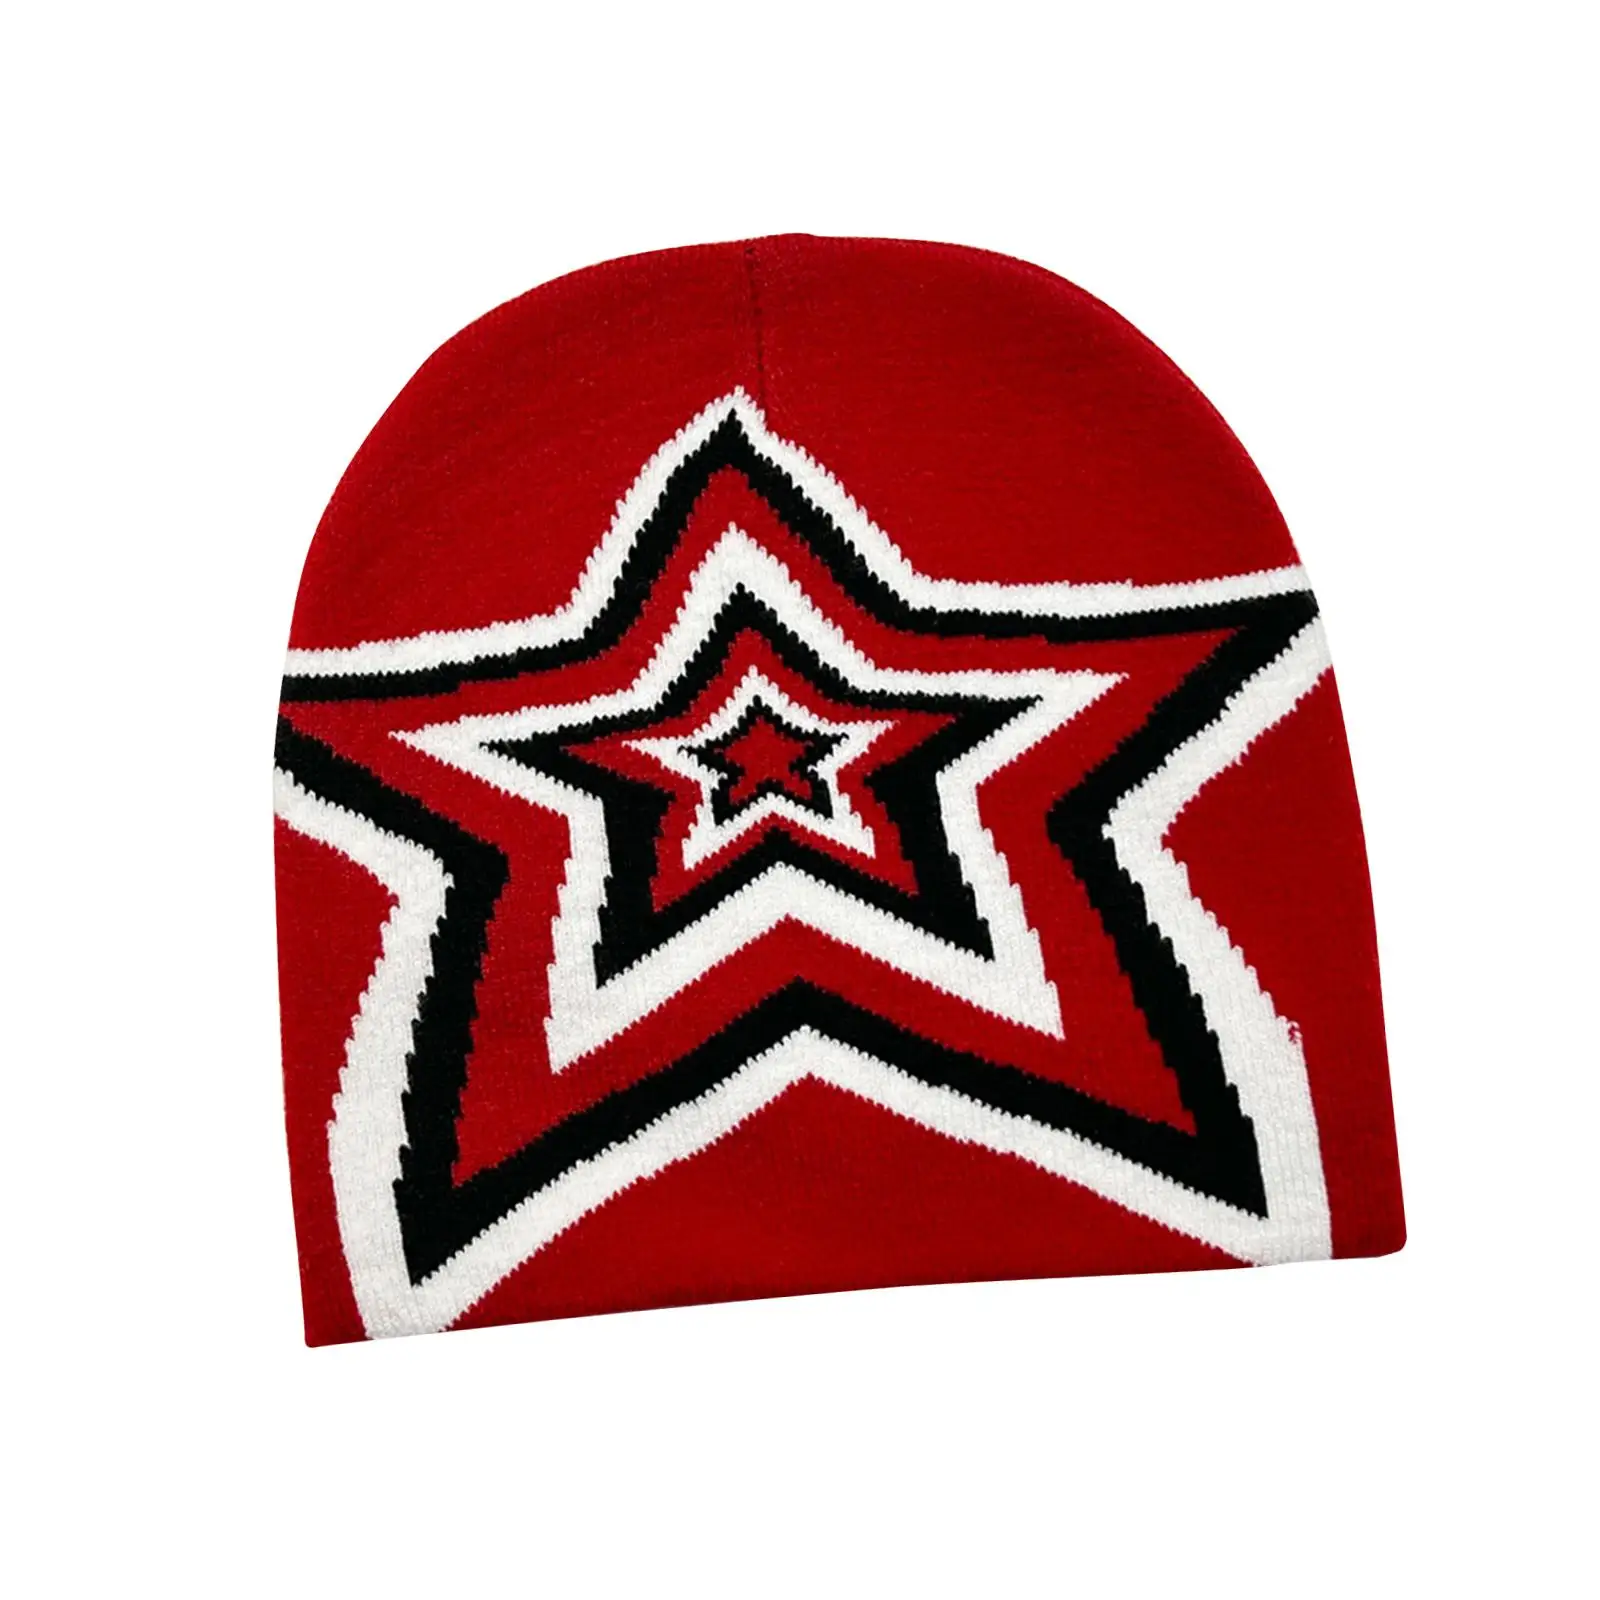 Knit Beanie Fashion Star Pattern Acrylic Knit Hats Stretchy Knitting Hat